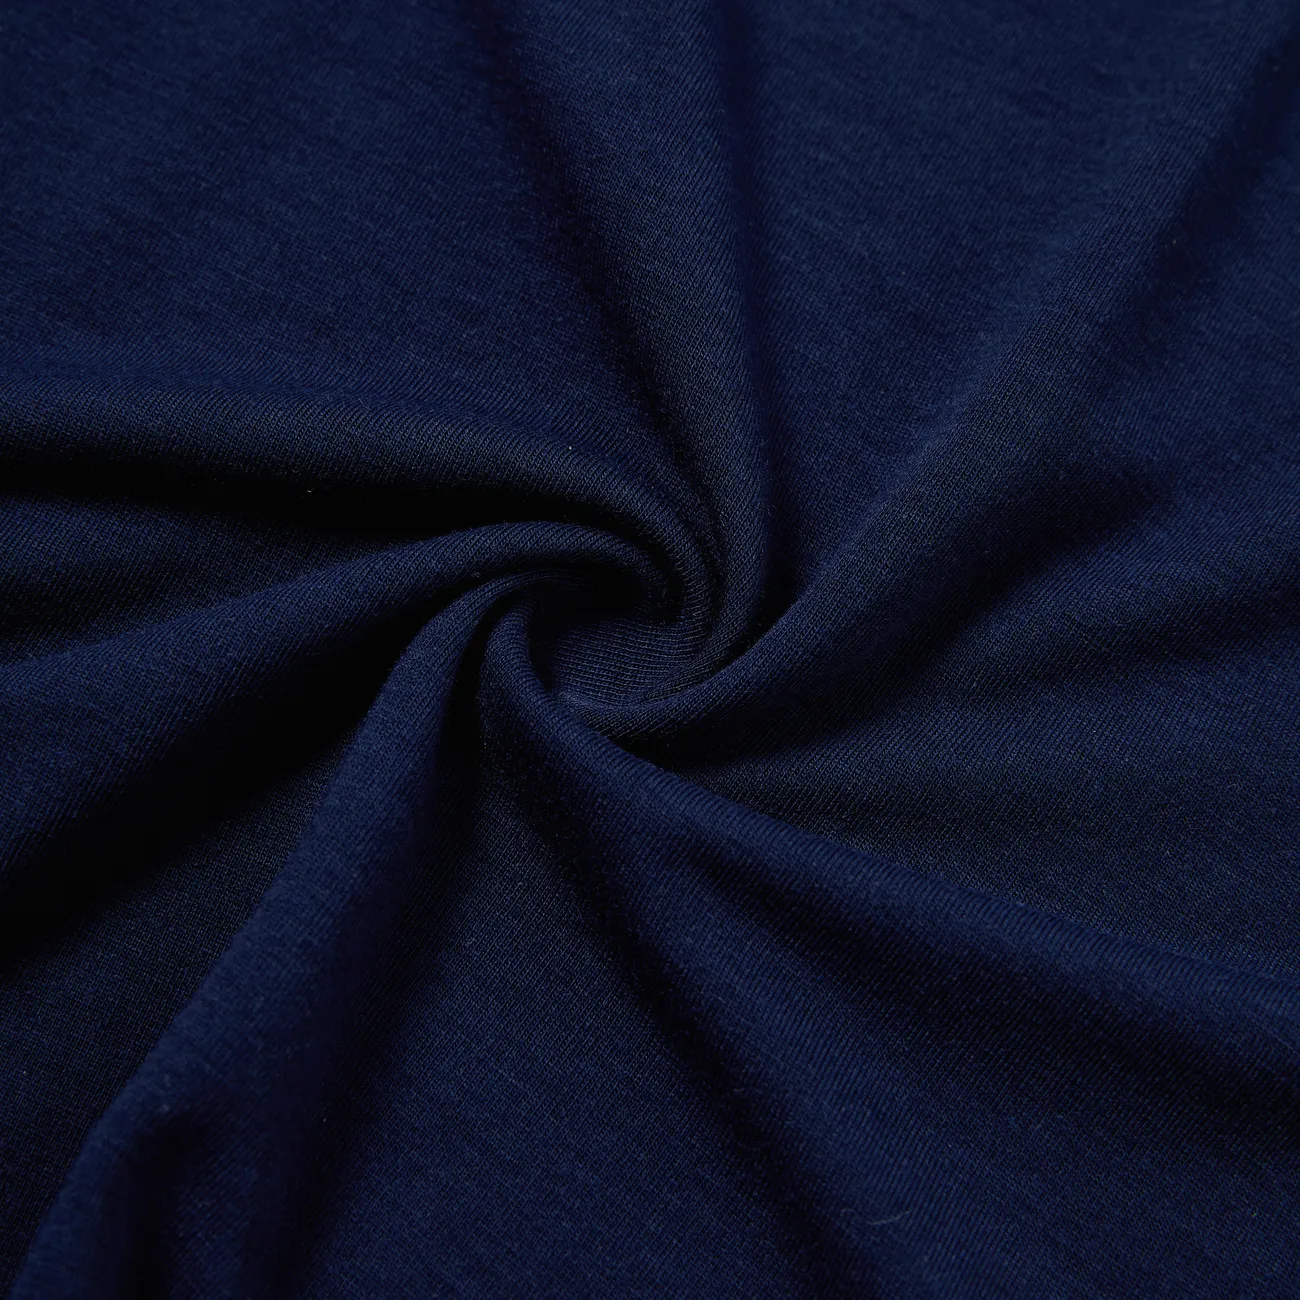 全家裝 短袖 親子裝 睡衣 (Flame Resistant) 藍黑 big image 1